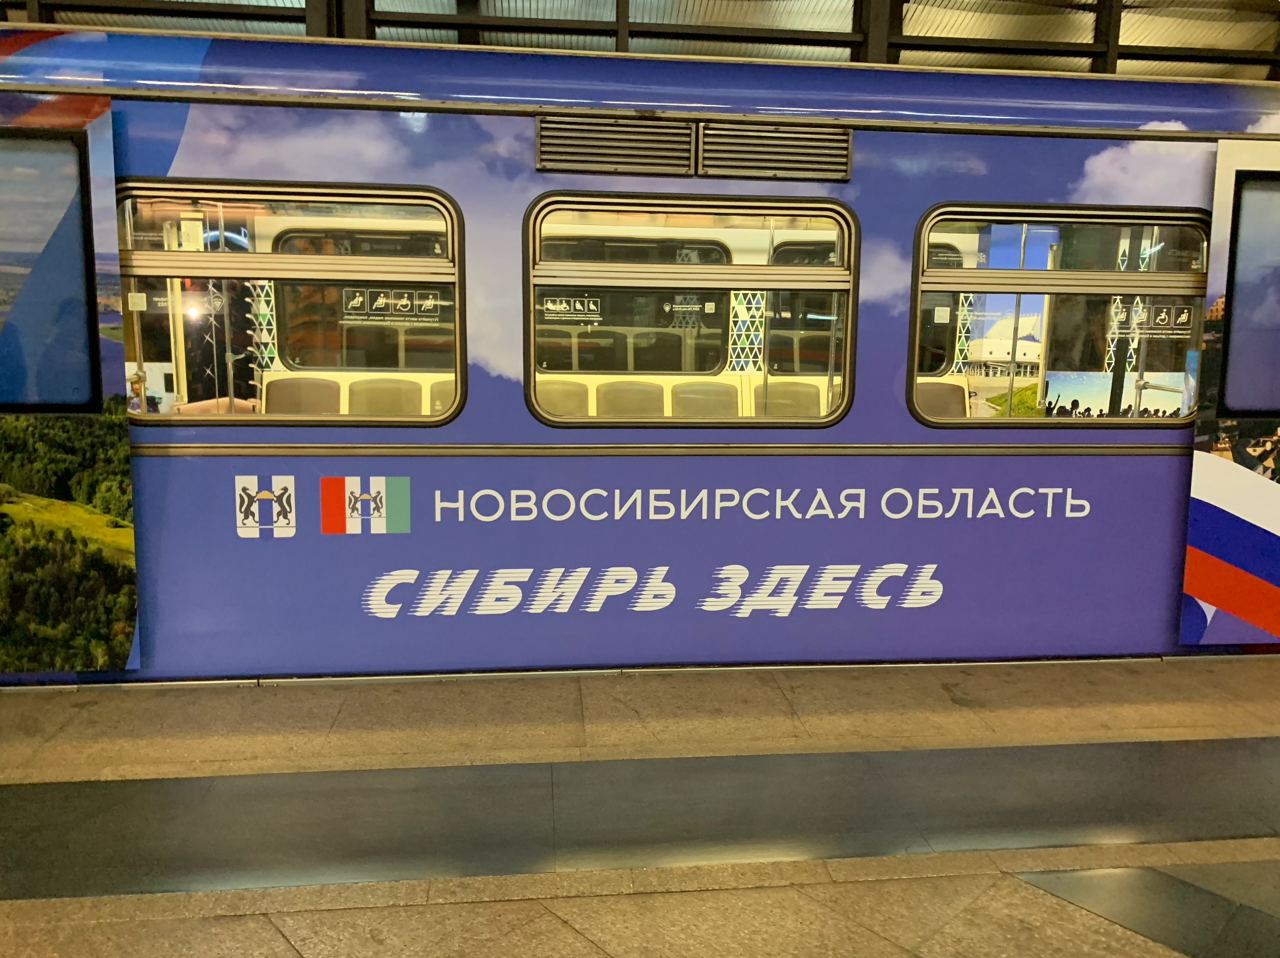 поезд москва в метро